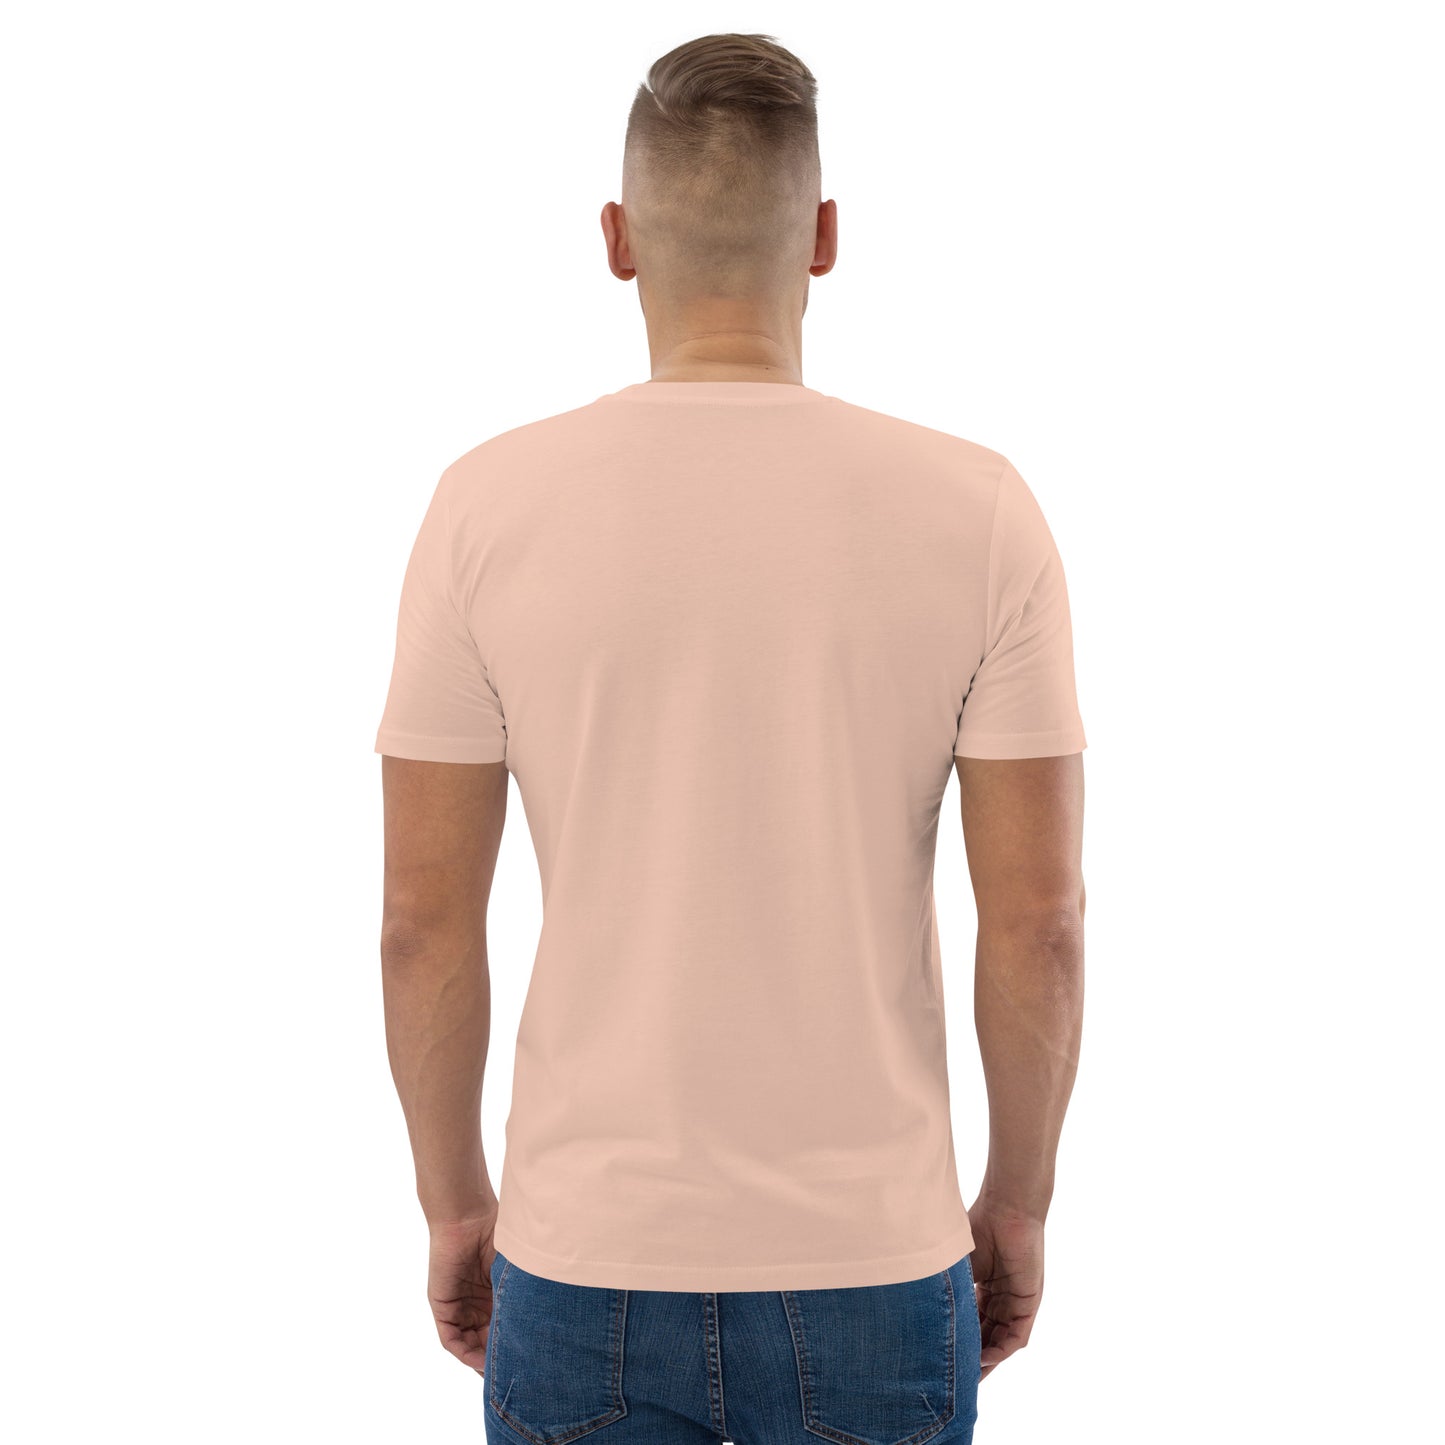 Camiseta unisex de algodón orgánico.